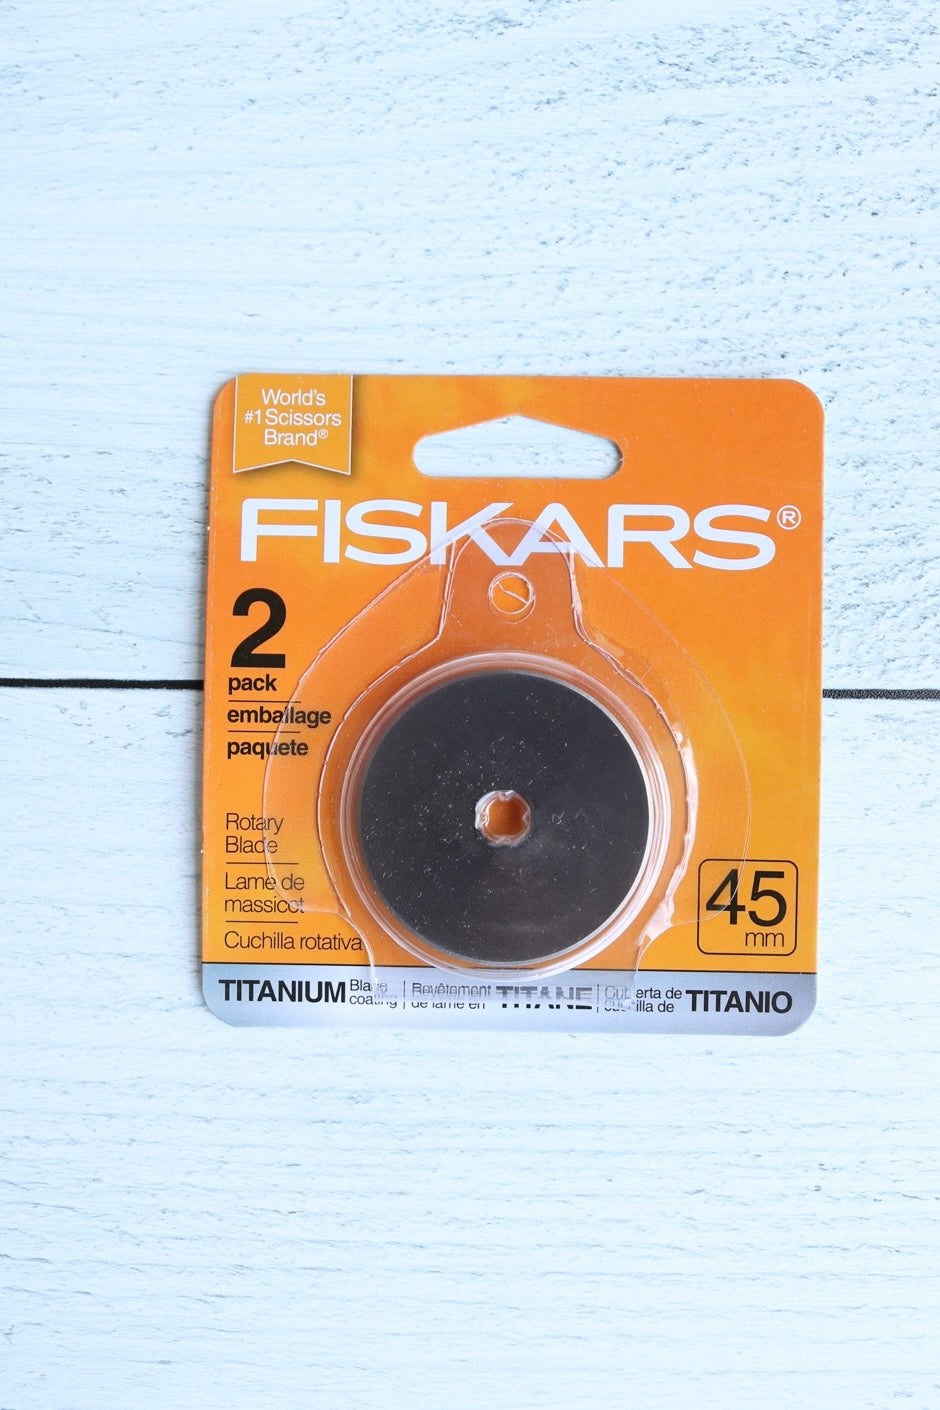 Fiskars 28mm Rotary Cutter/Replacement Blades